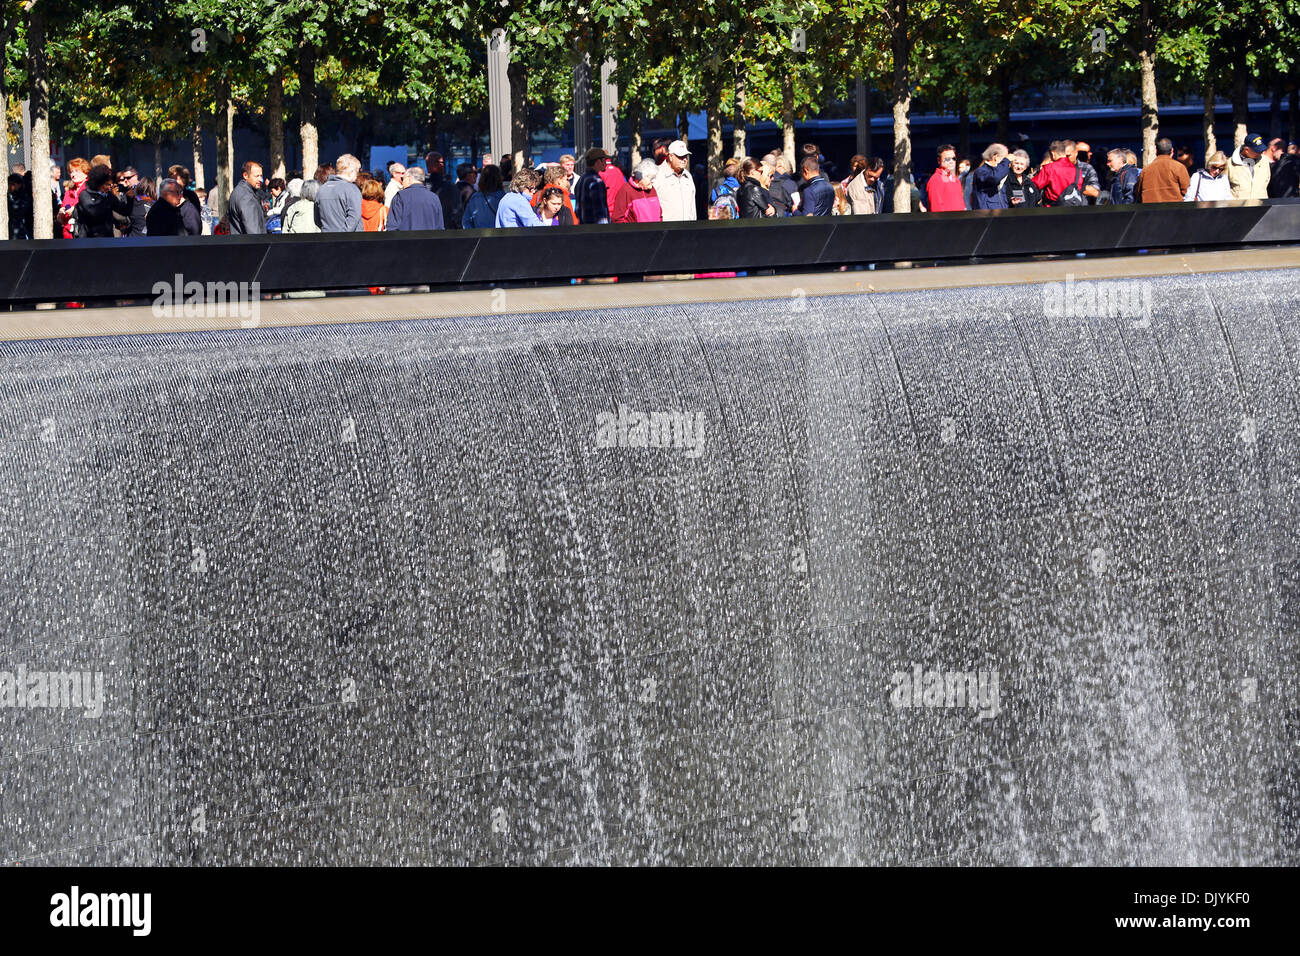 National September 11 Memorial for the 9/11 World Trade Center attack, New York. America Stock Photo